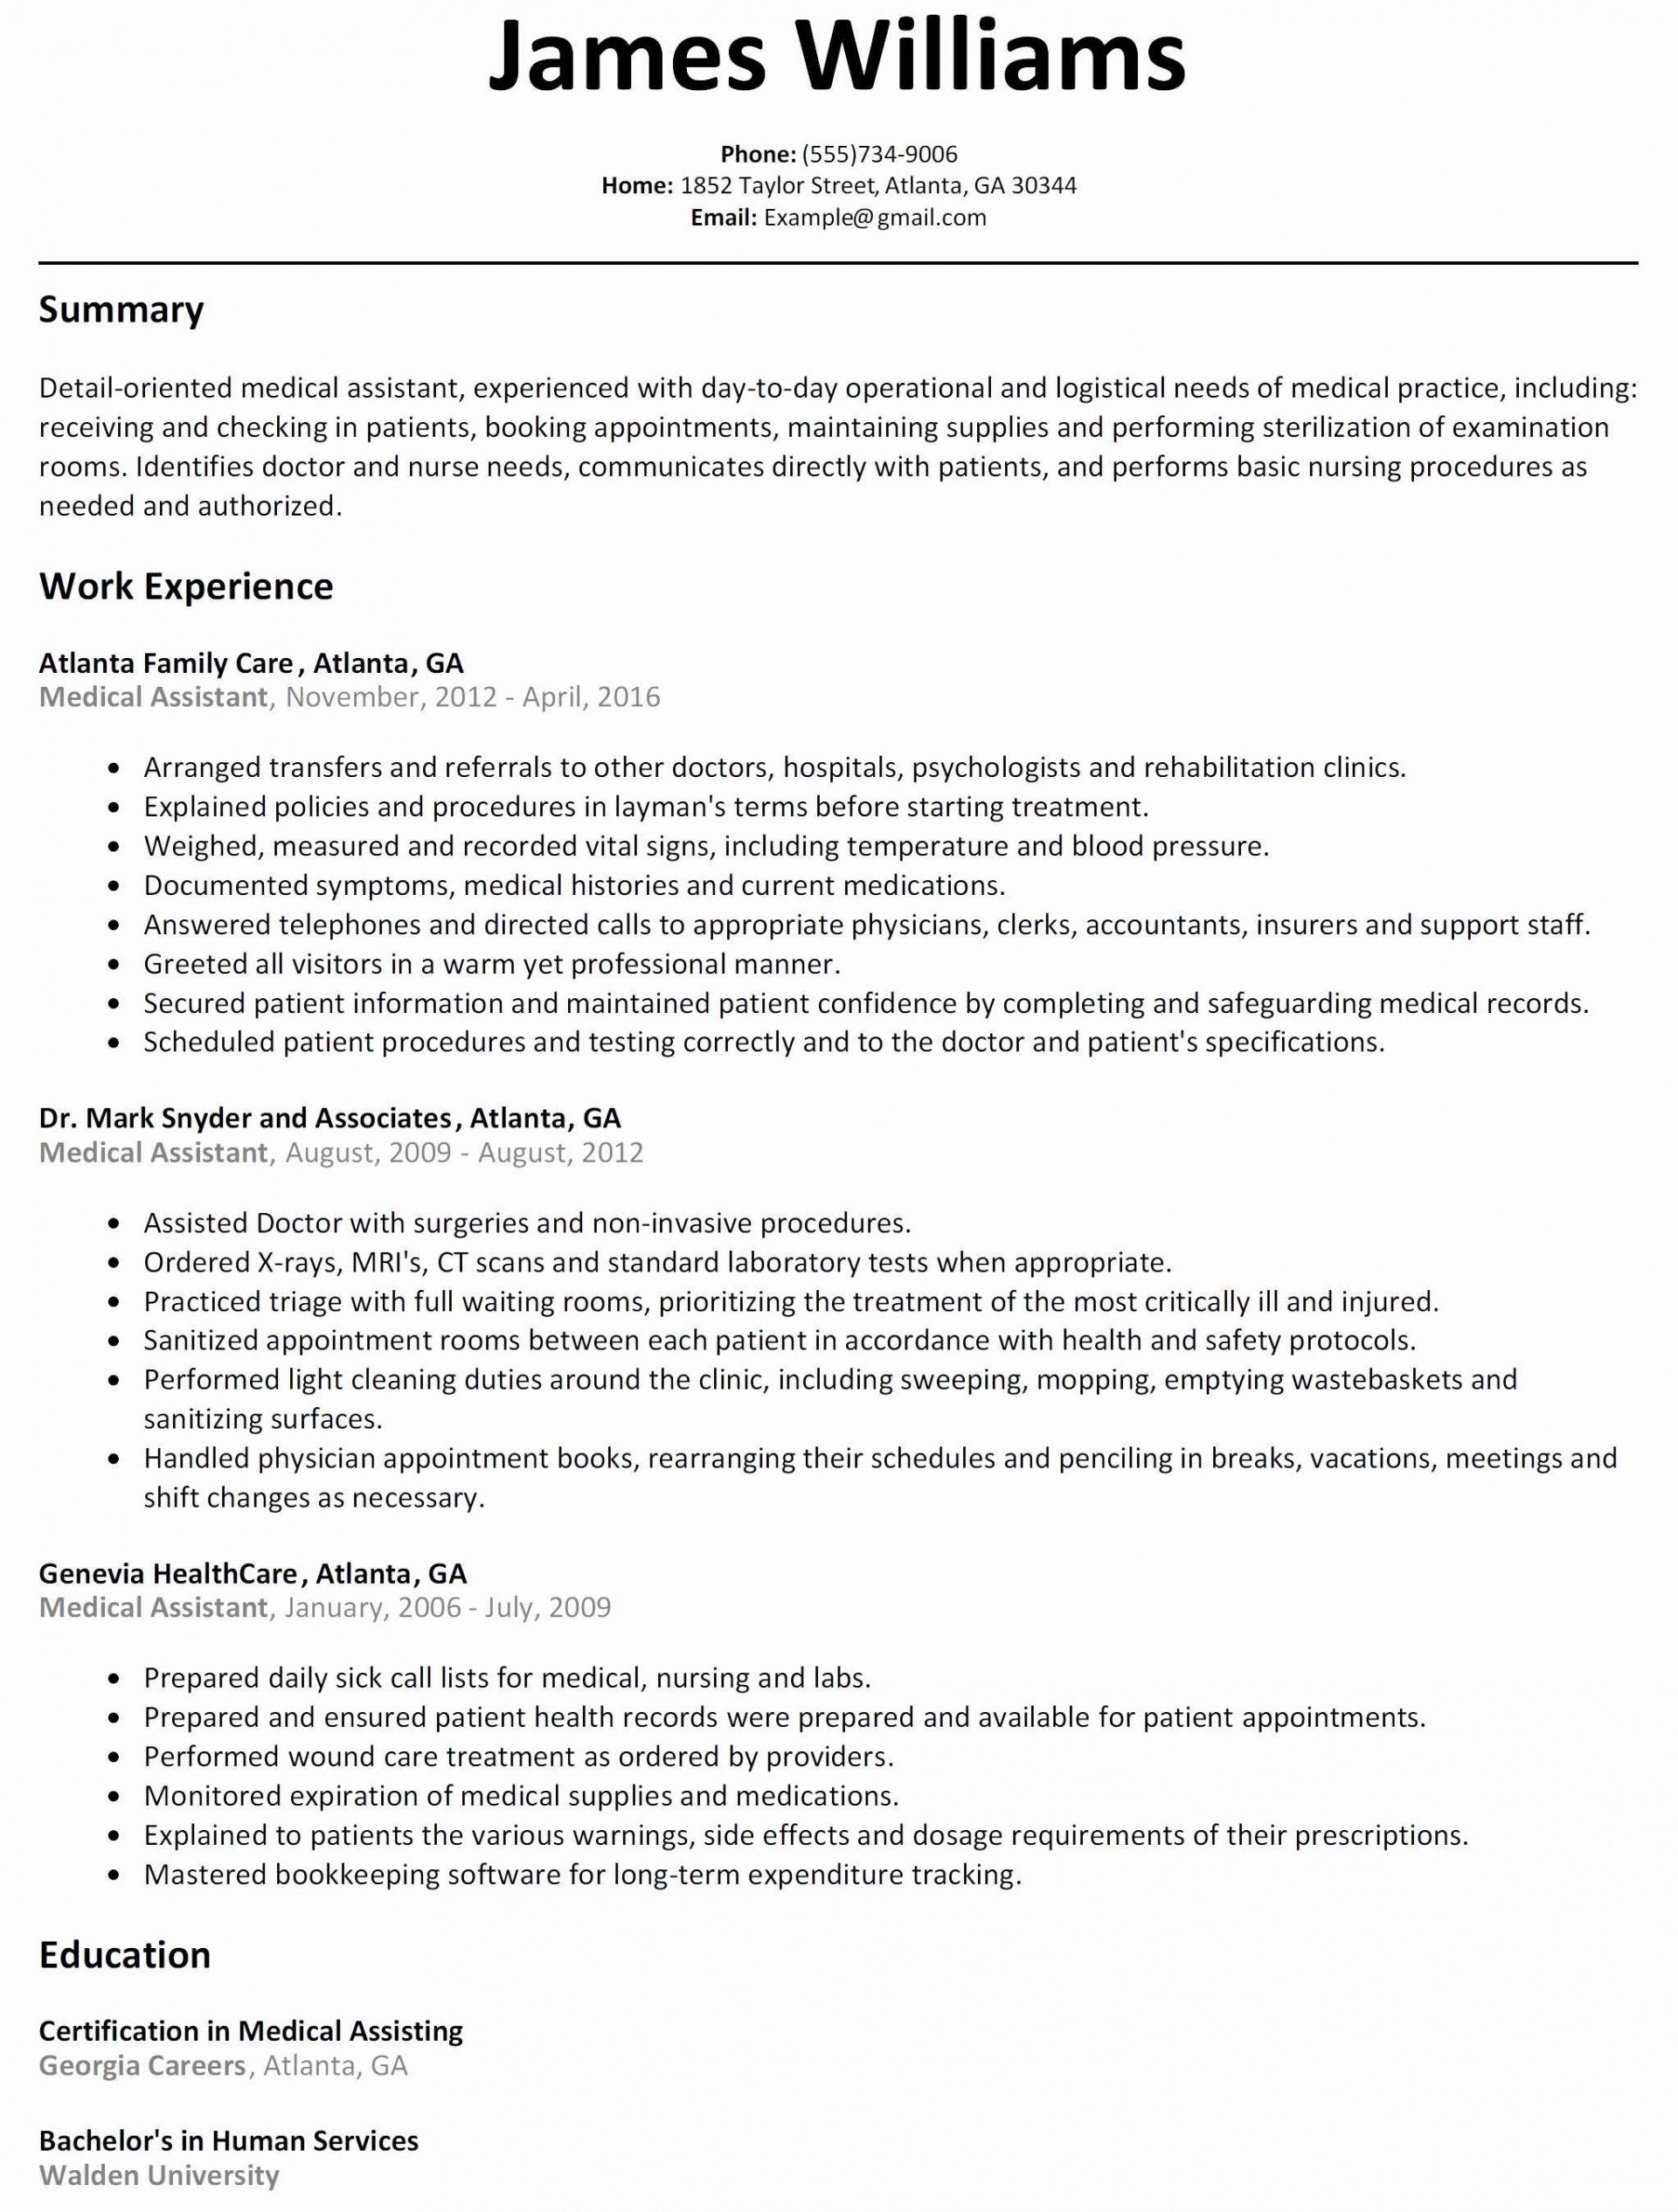 Sample Resume Summary For High School Student